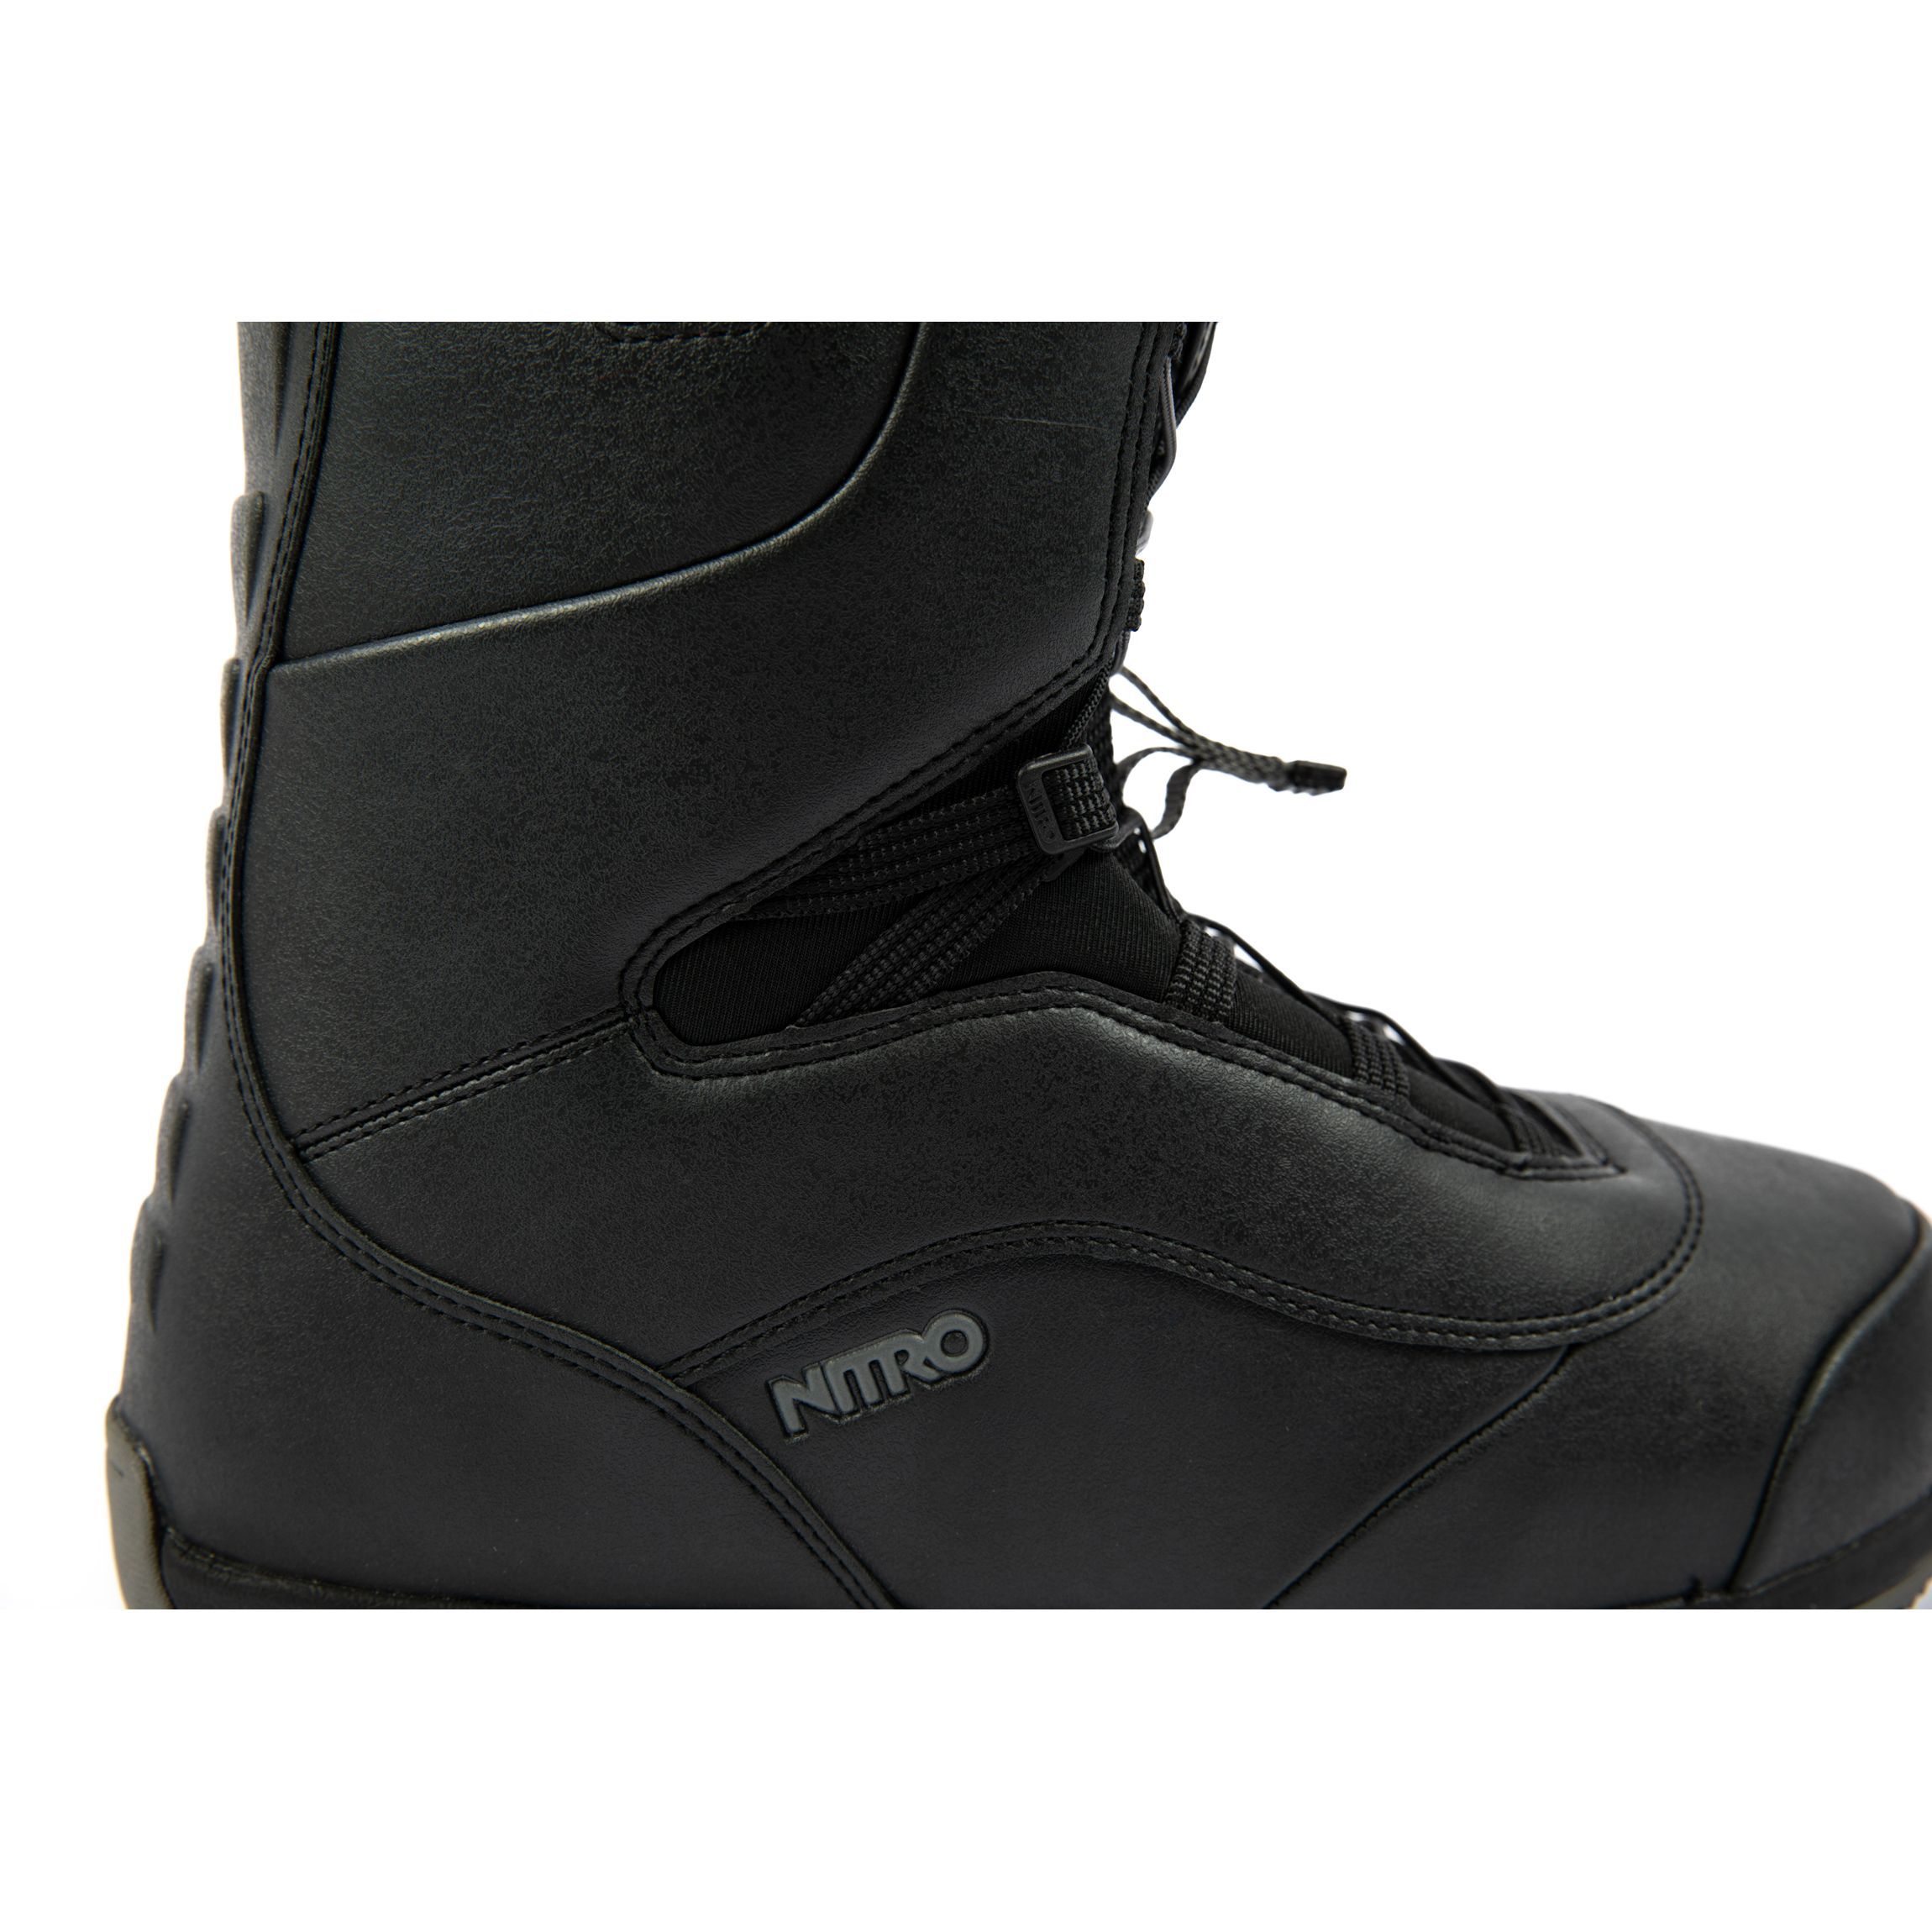 Boots Snowboard -  nitro Venture TLS